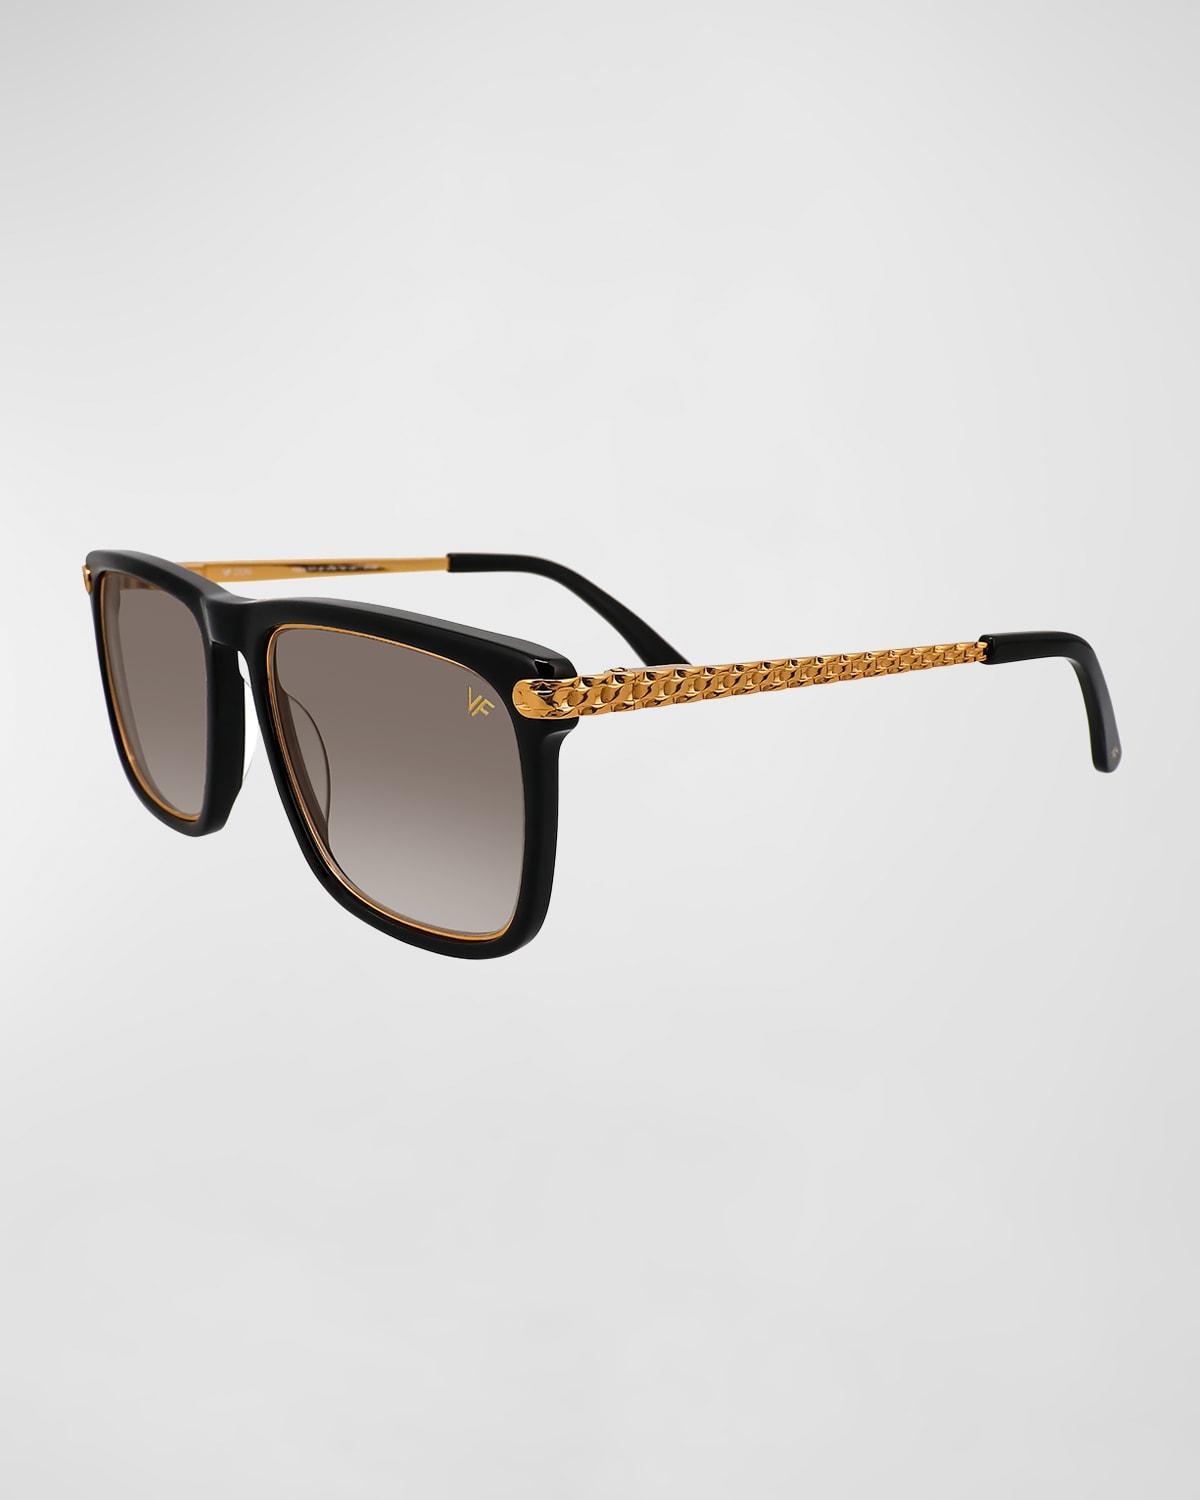 FENDI Womens Baguette 54mm Oval Sunglasses Product Image